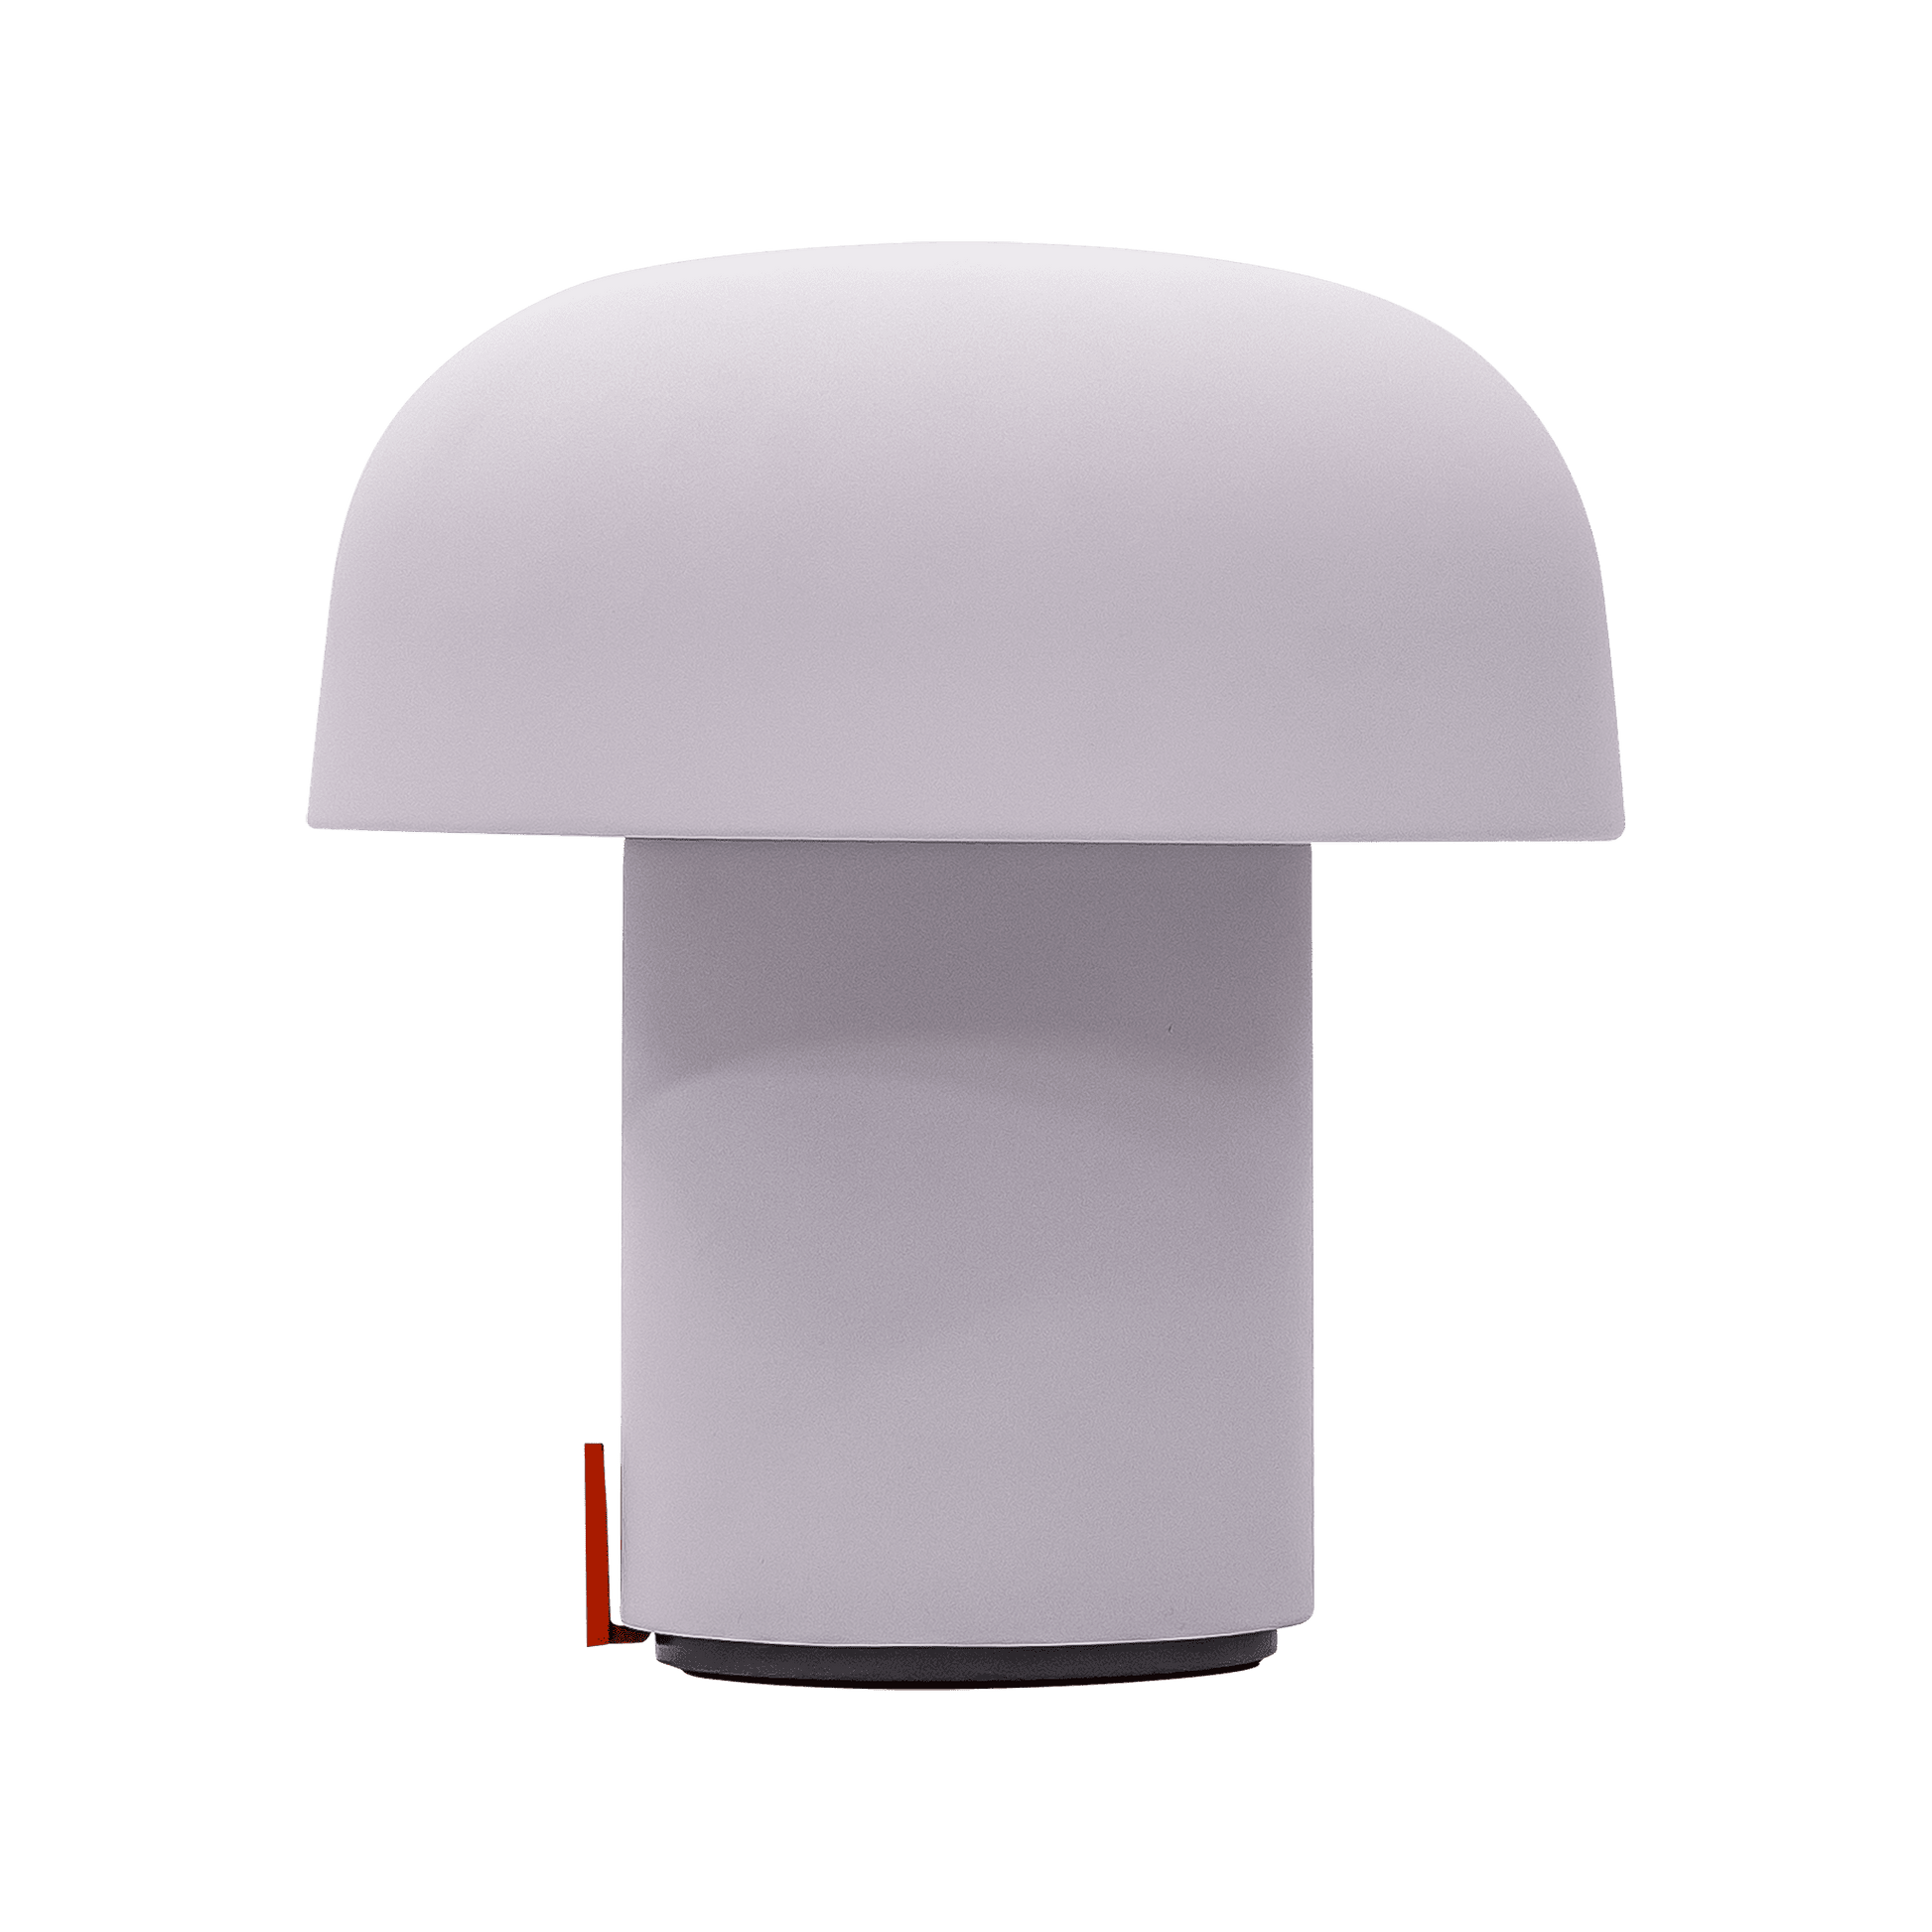 Kooduu Sensa Portable LED Lamp in Cloudy White